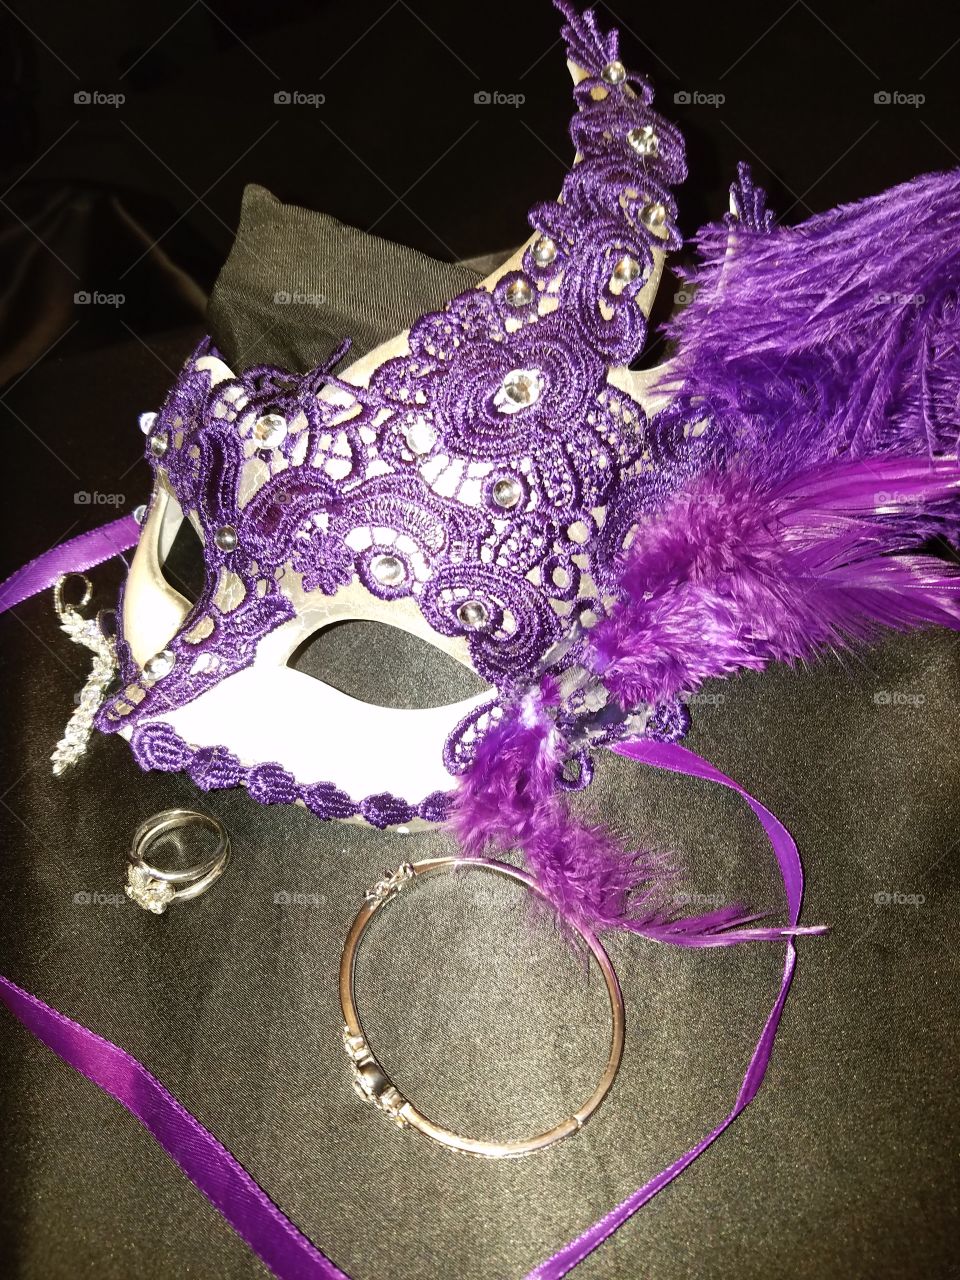 purple lace,feathers and satin ribbons Mardi Gras mask. diamond earrings fleur de lis ring and diamond bracelet